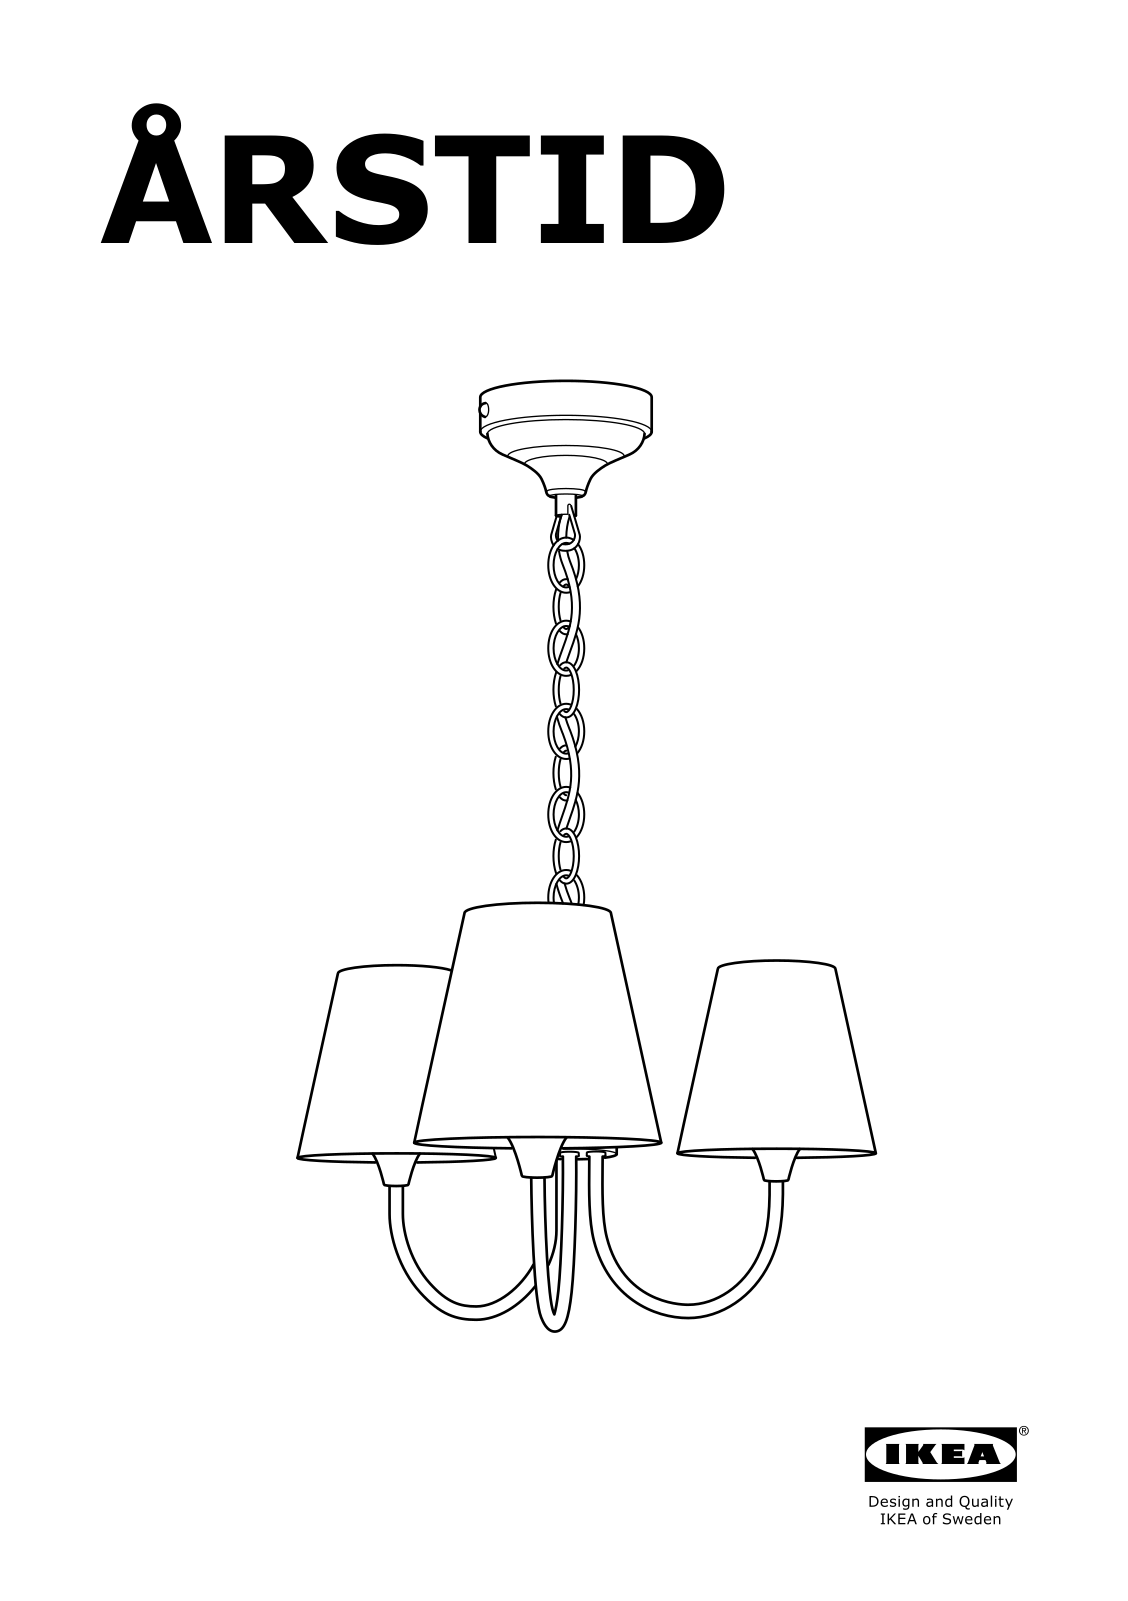 IKEA ARSTID User Manual